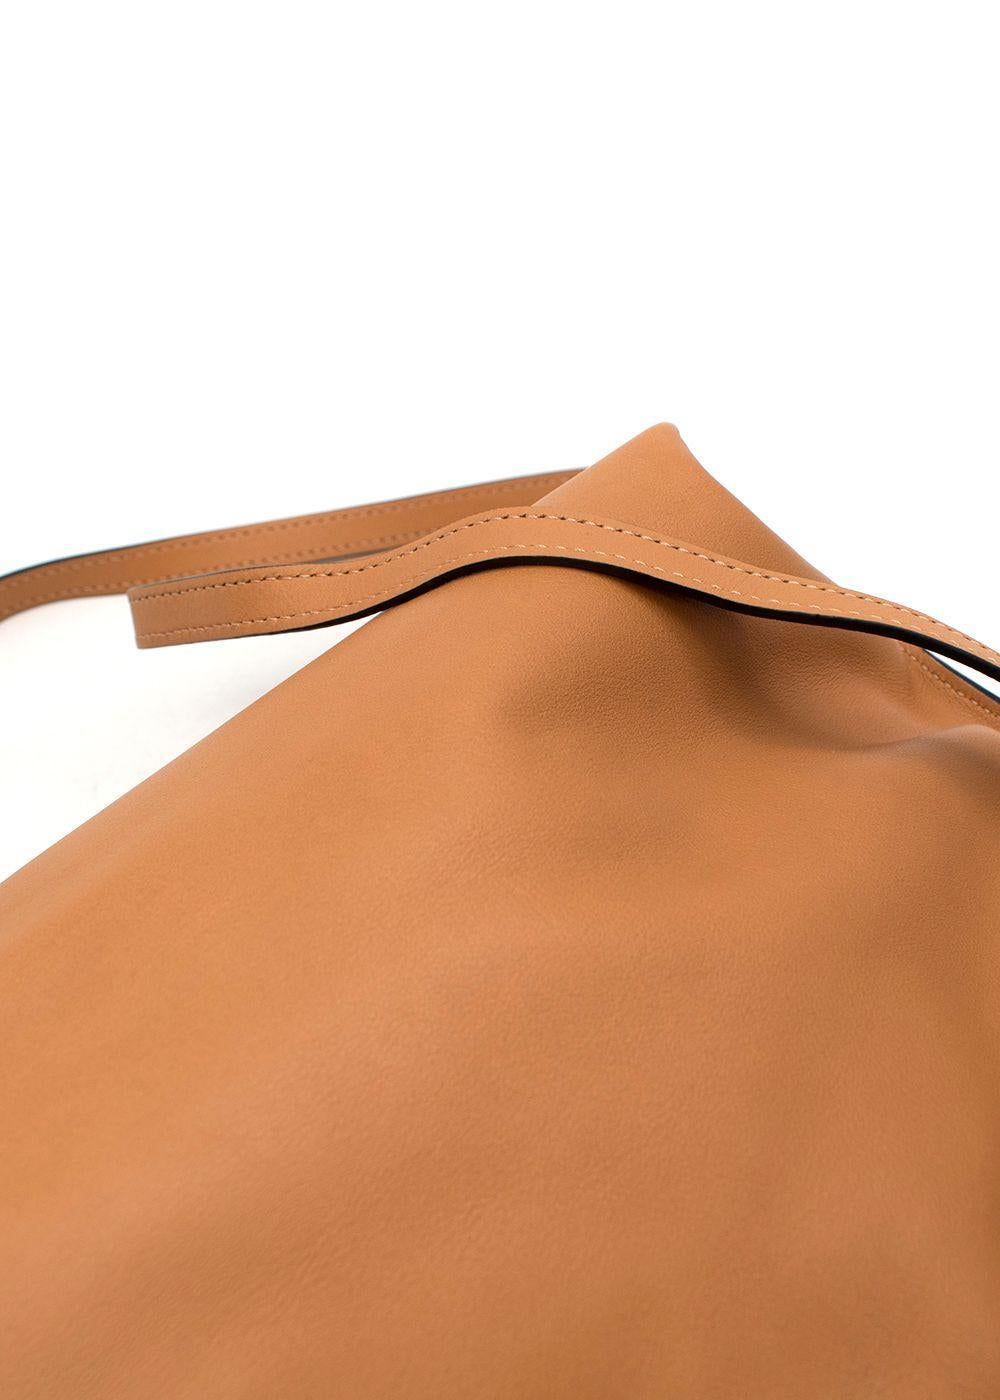 Loewe Tan Brown Leather Mini Flamenco Knot Clutch Bag For Sale 3